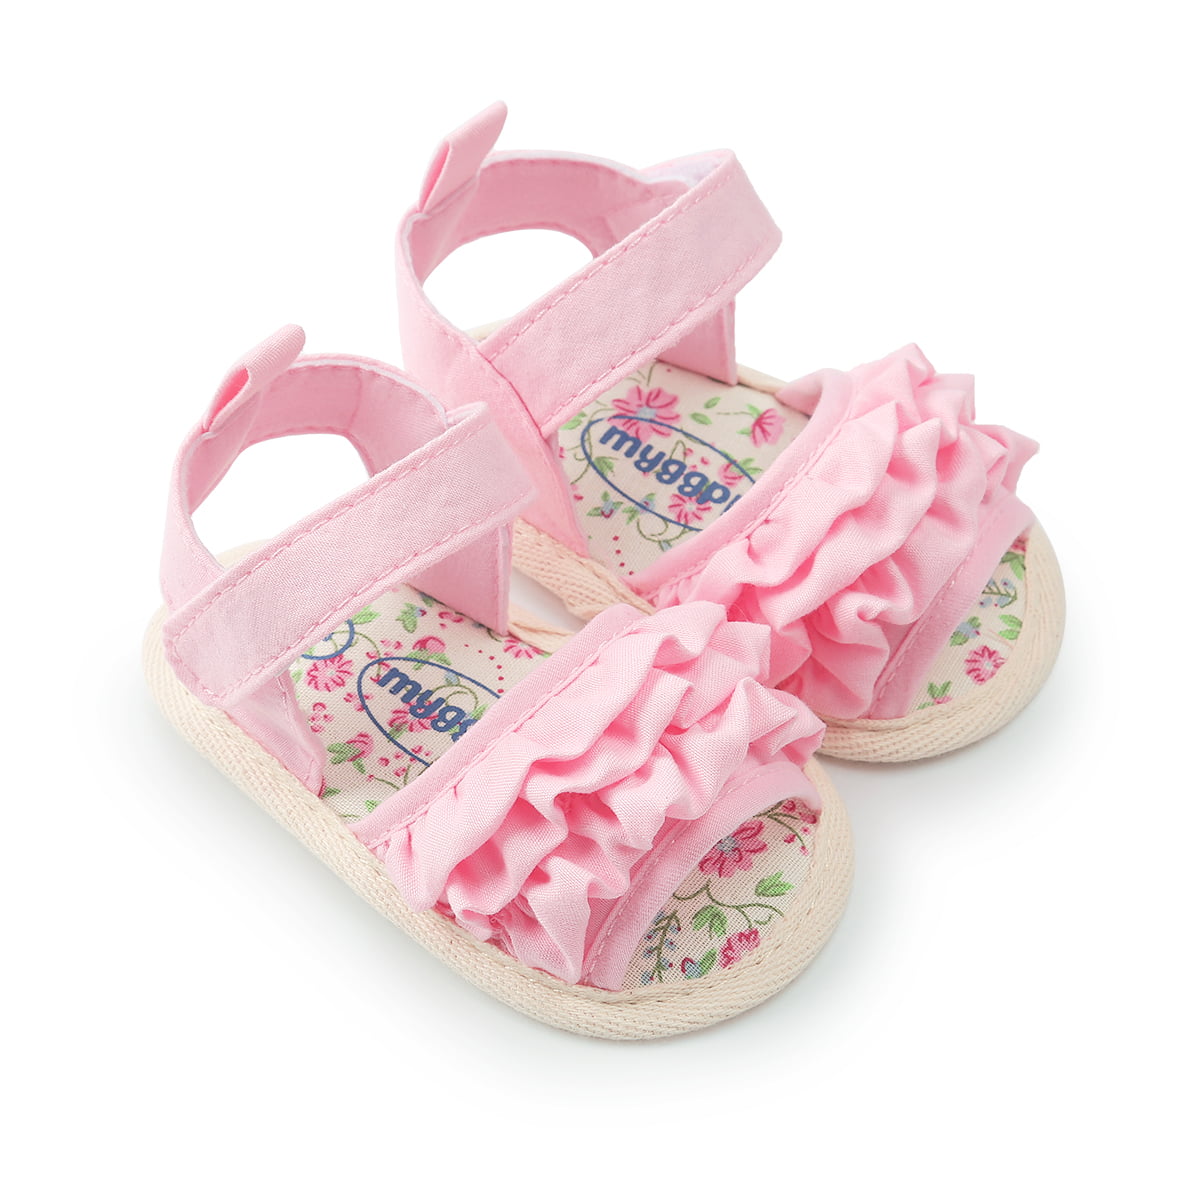 Lanhui Sandals Kids Toddler Girls Solid Flower Princess Beach Shoes Wedding